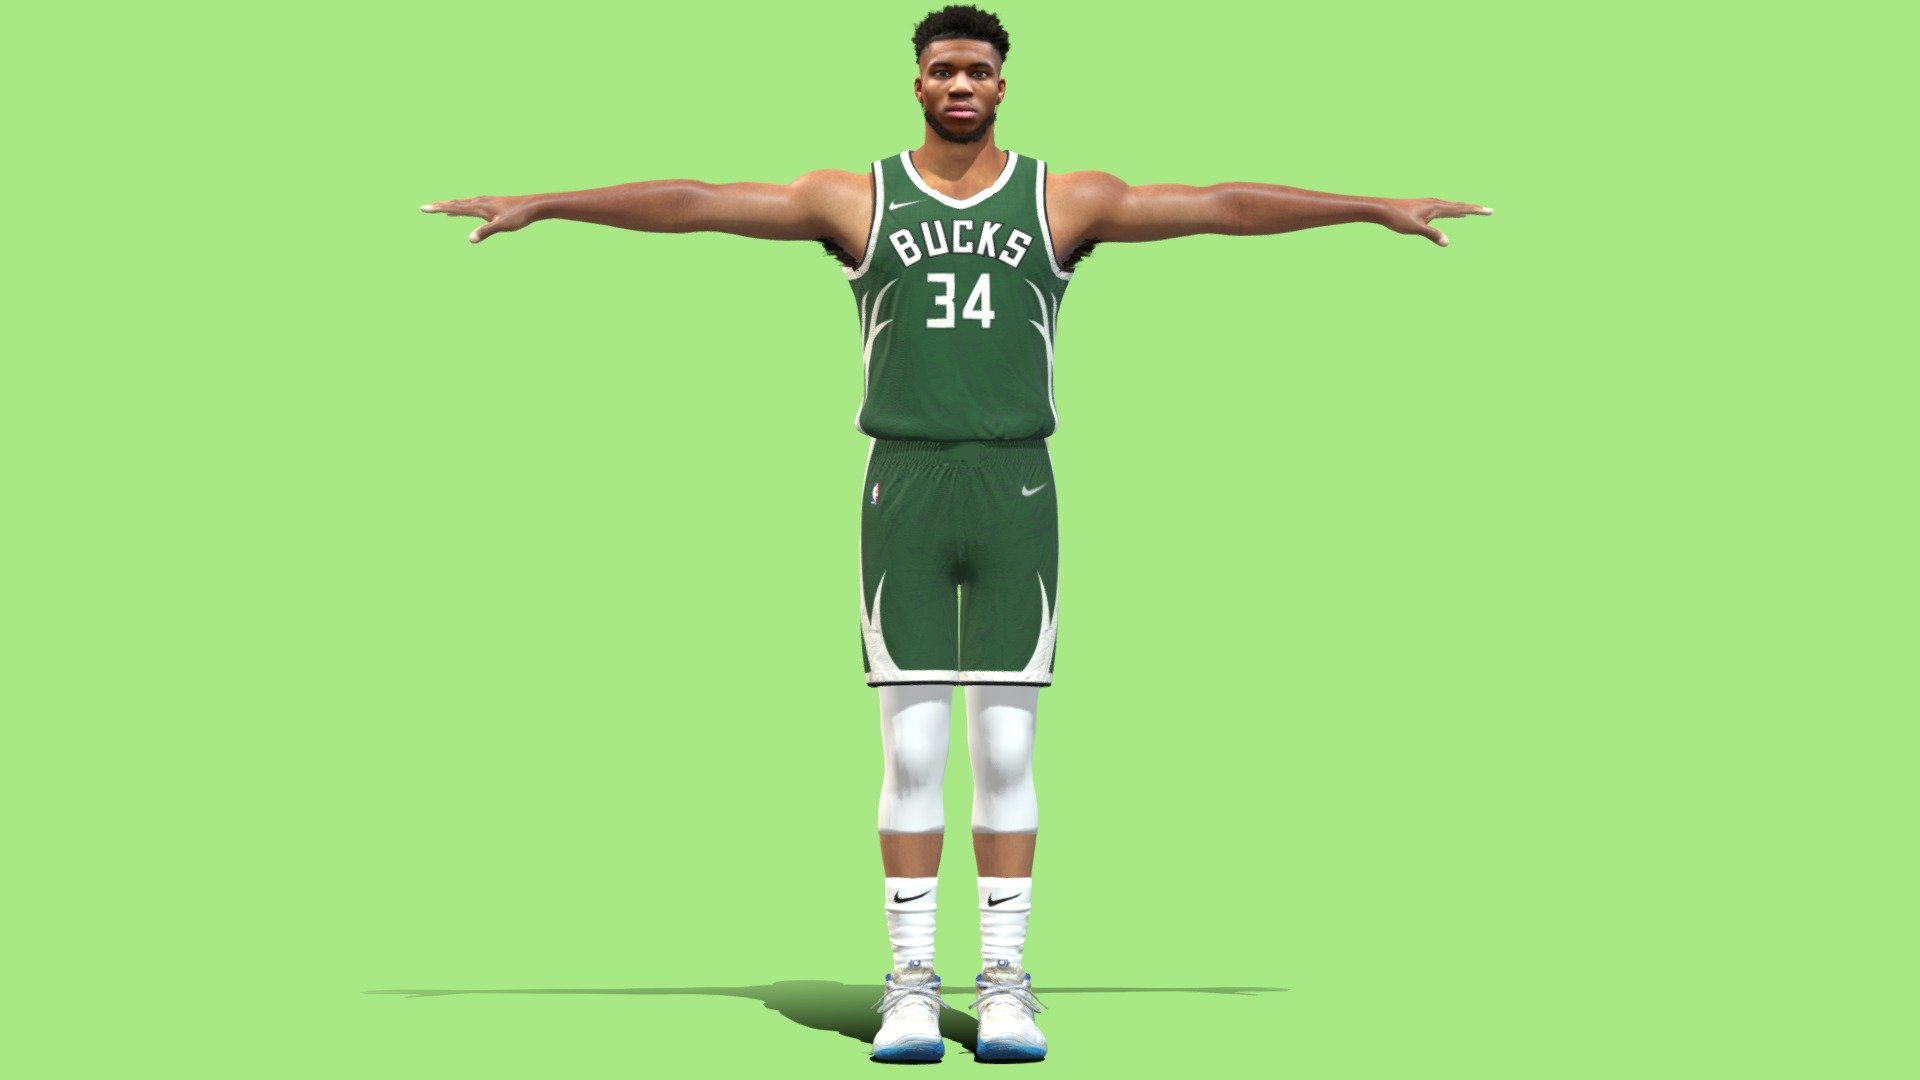 T- Pose Rigged Blake Griffin Boston Celtics NBA 3D Model by